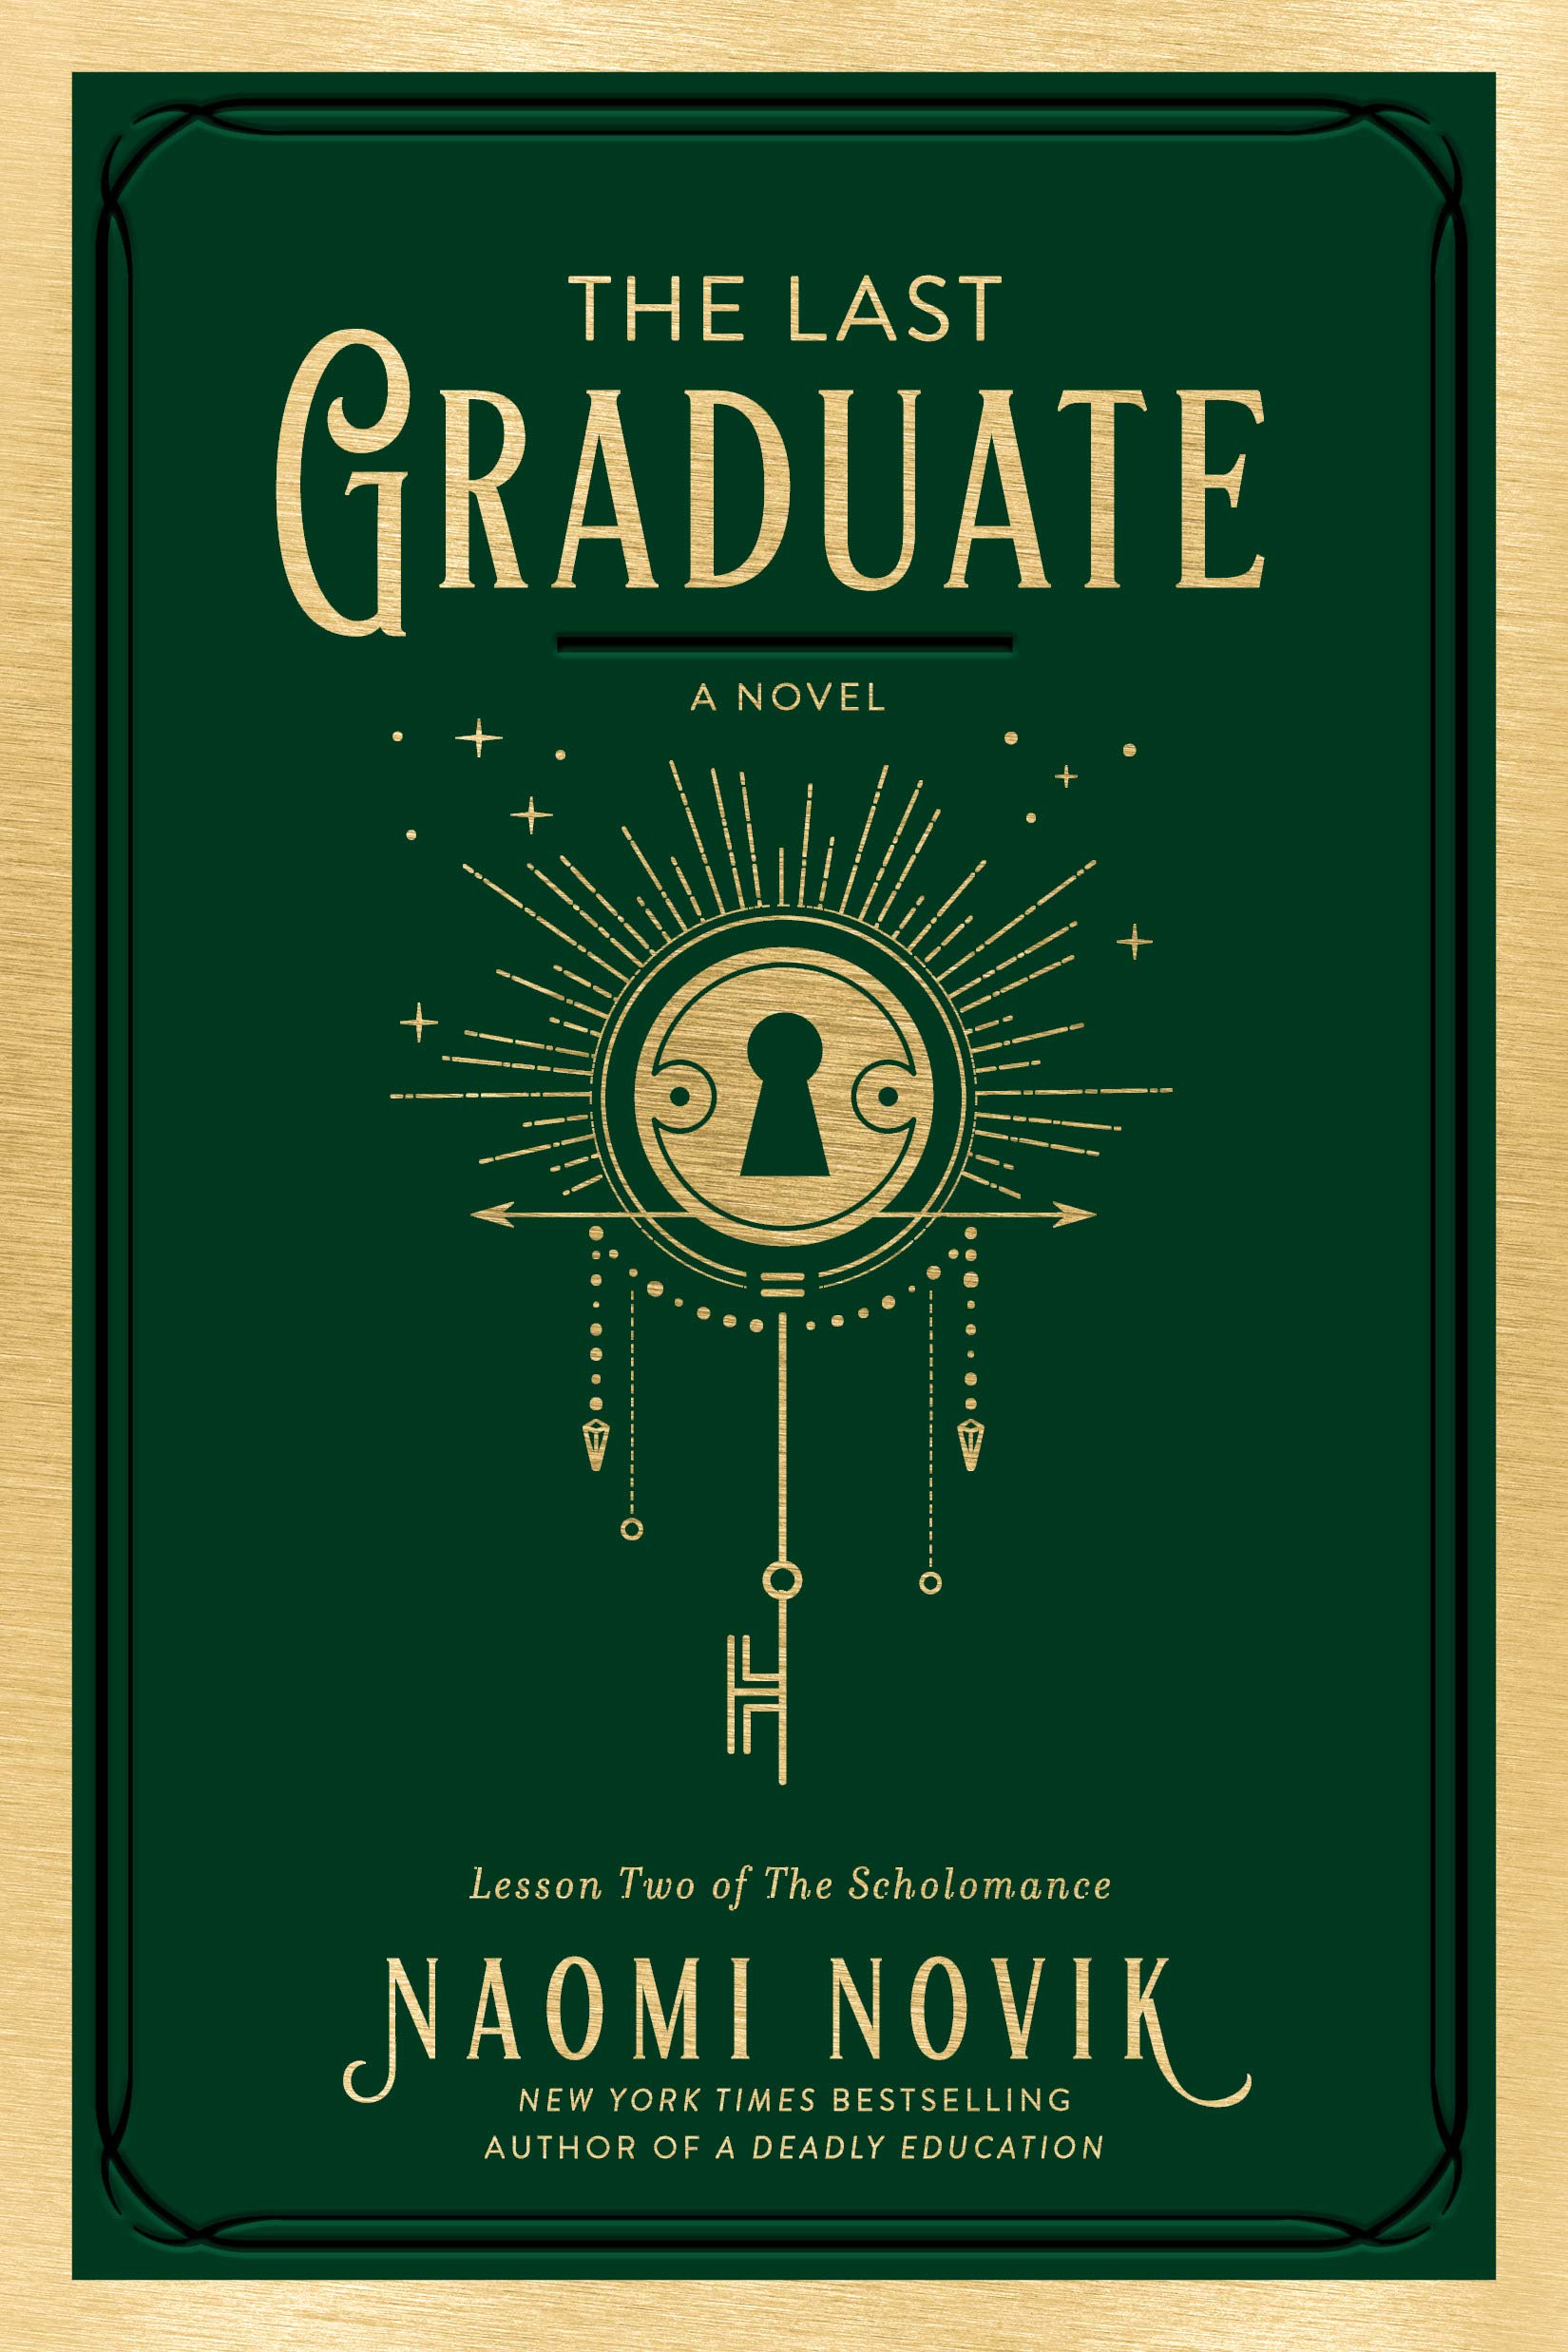 The Last Graduate: A Novel Hardcover by Naomi Novik